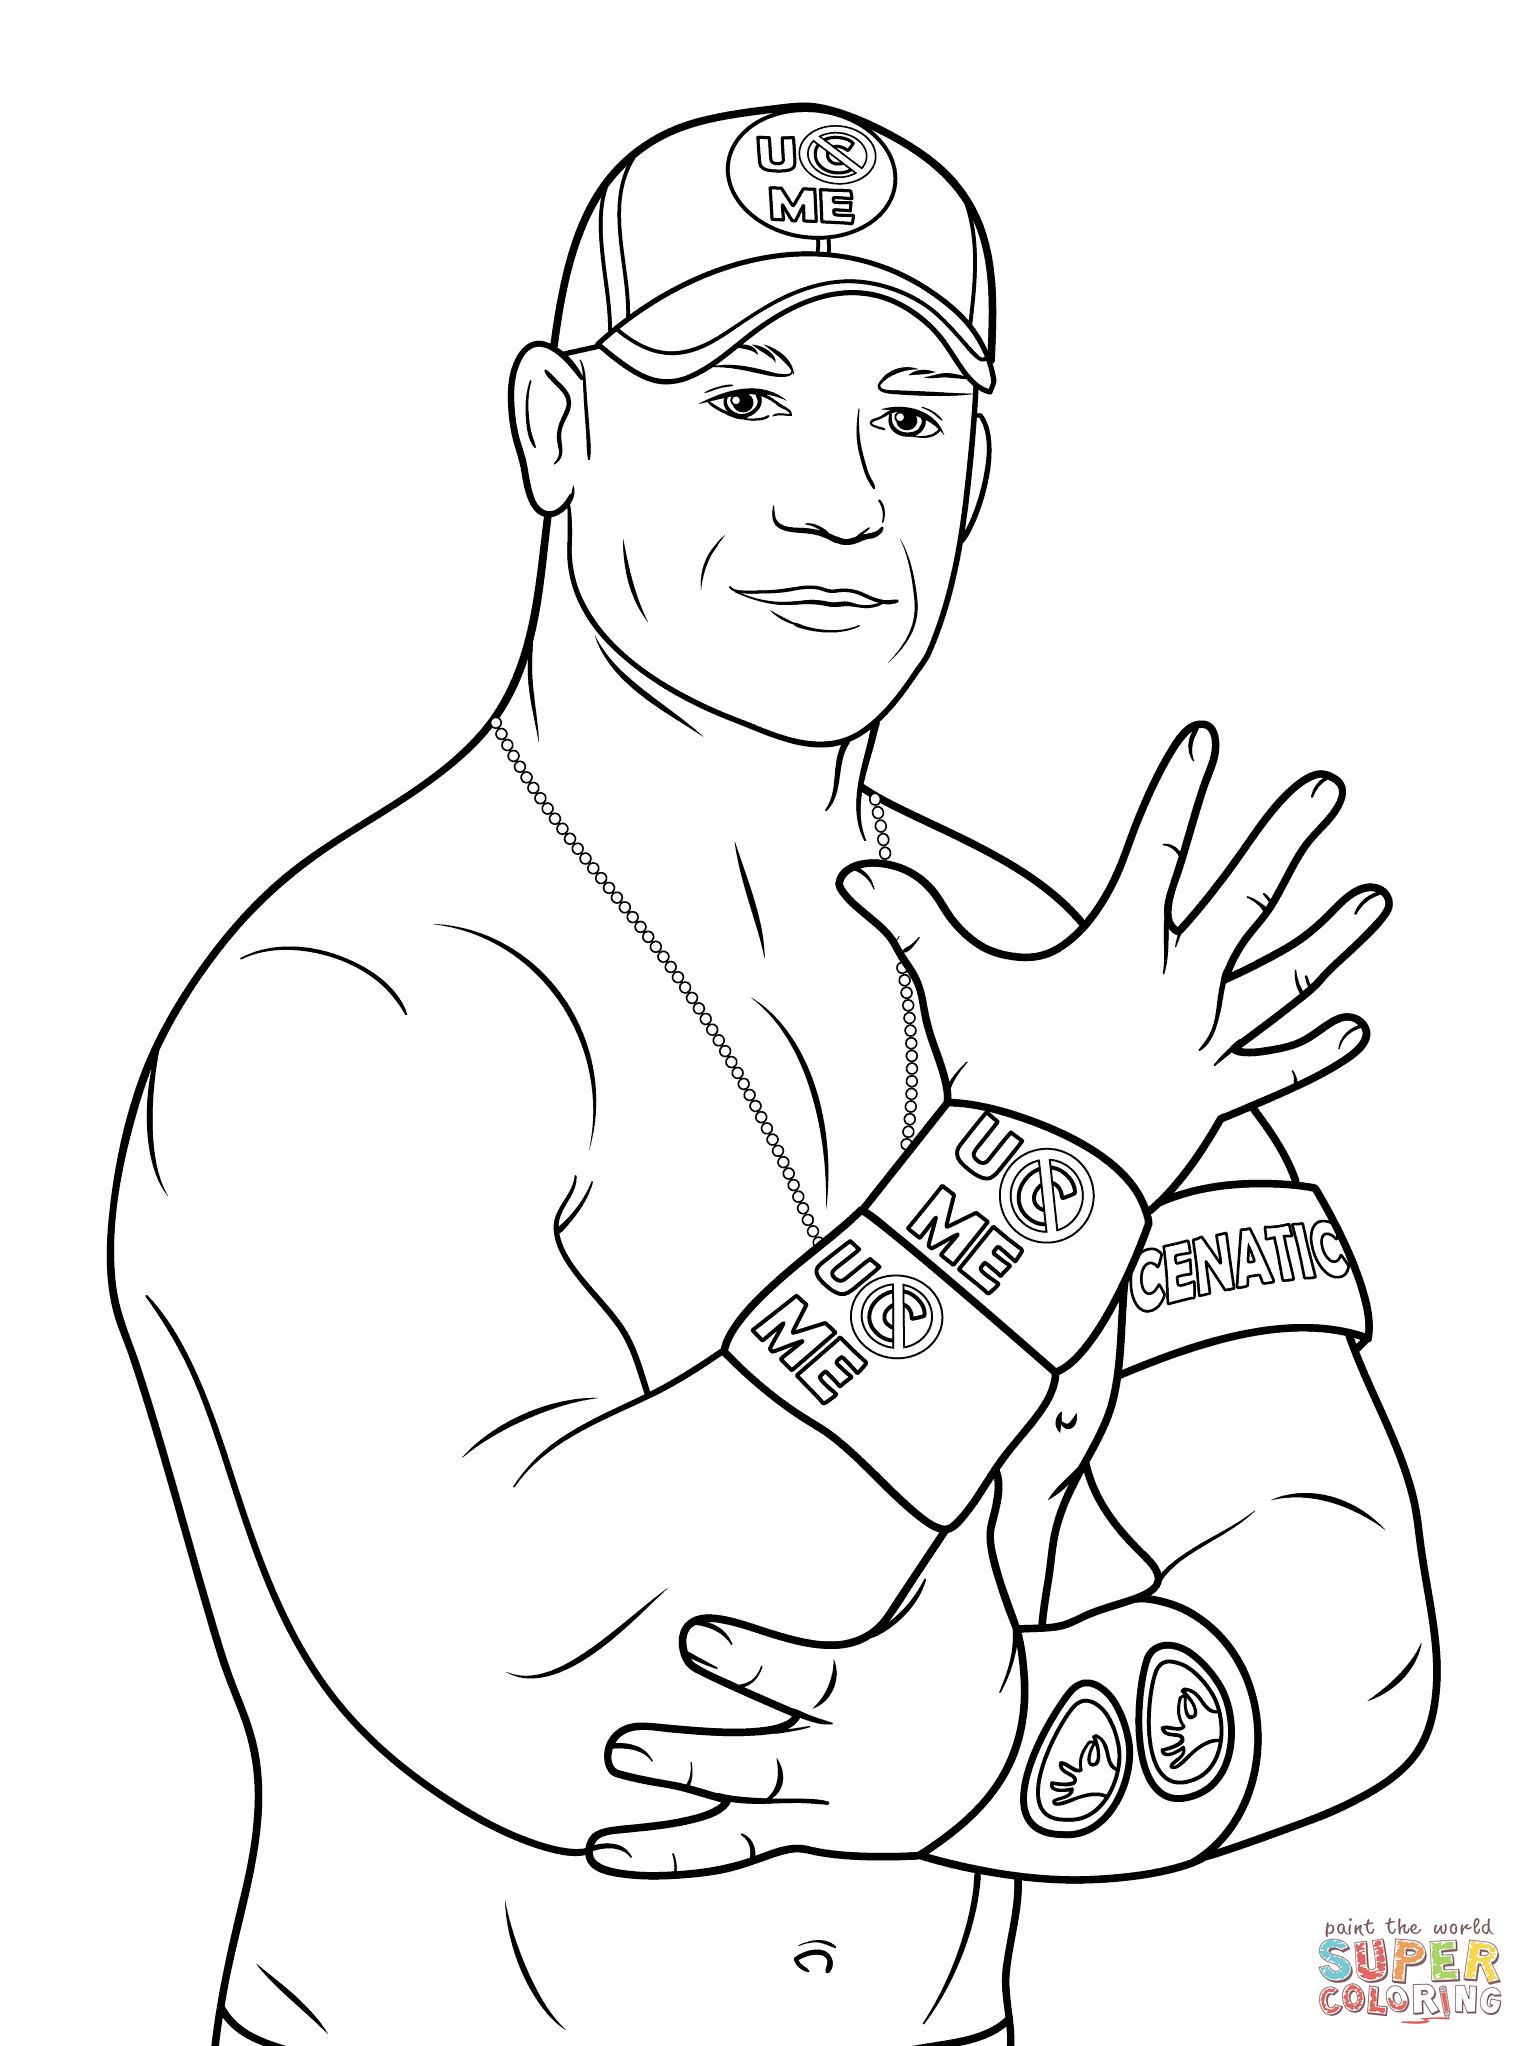 John Cena Coloring Page